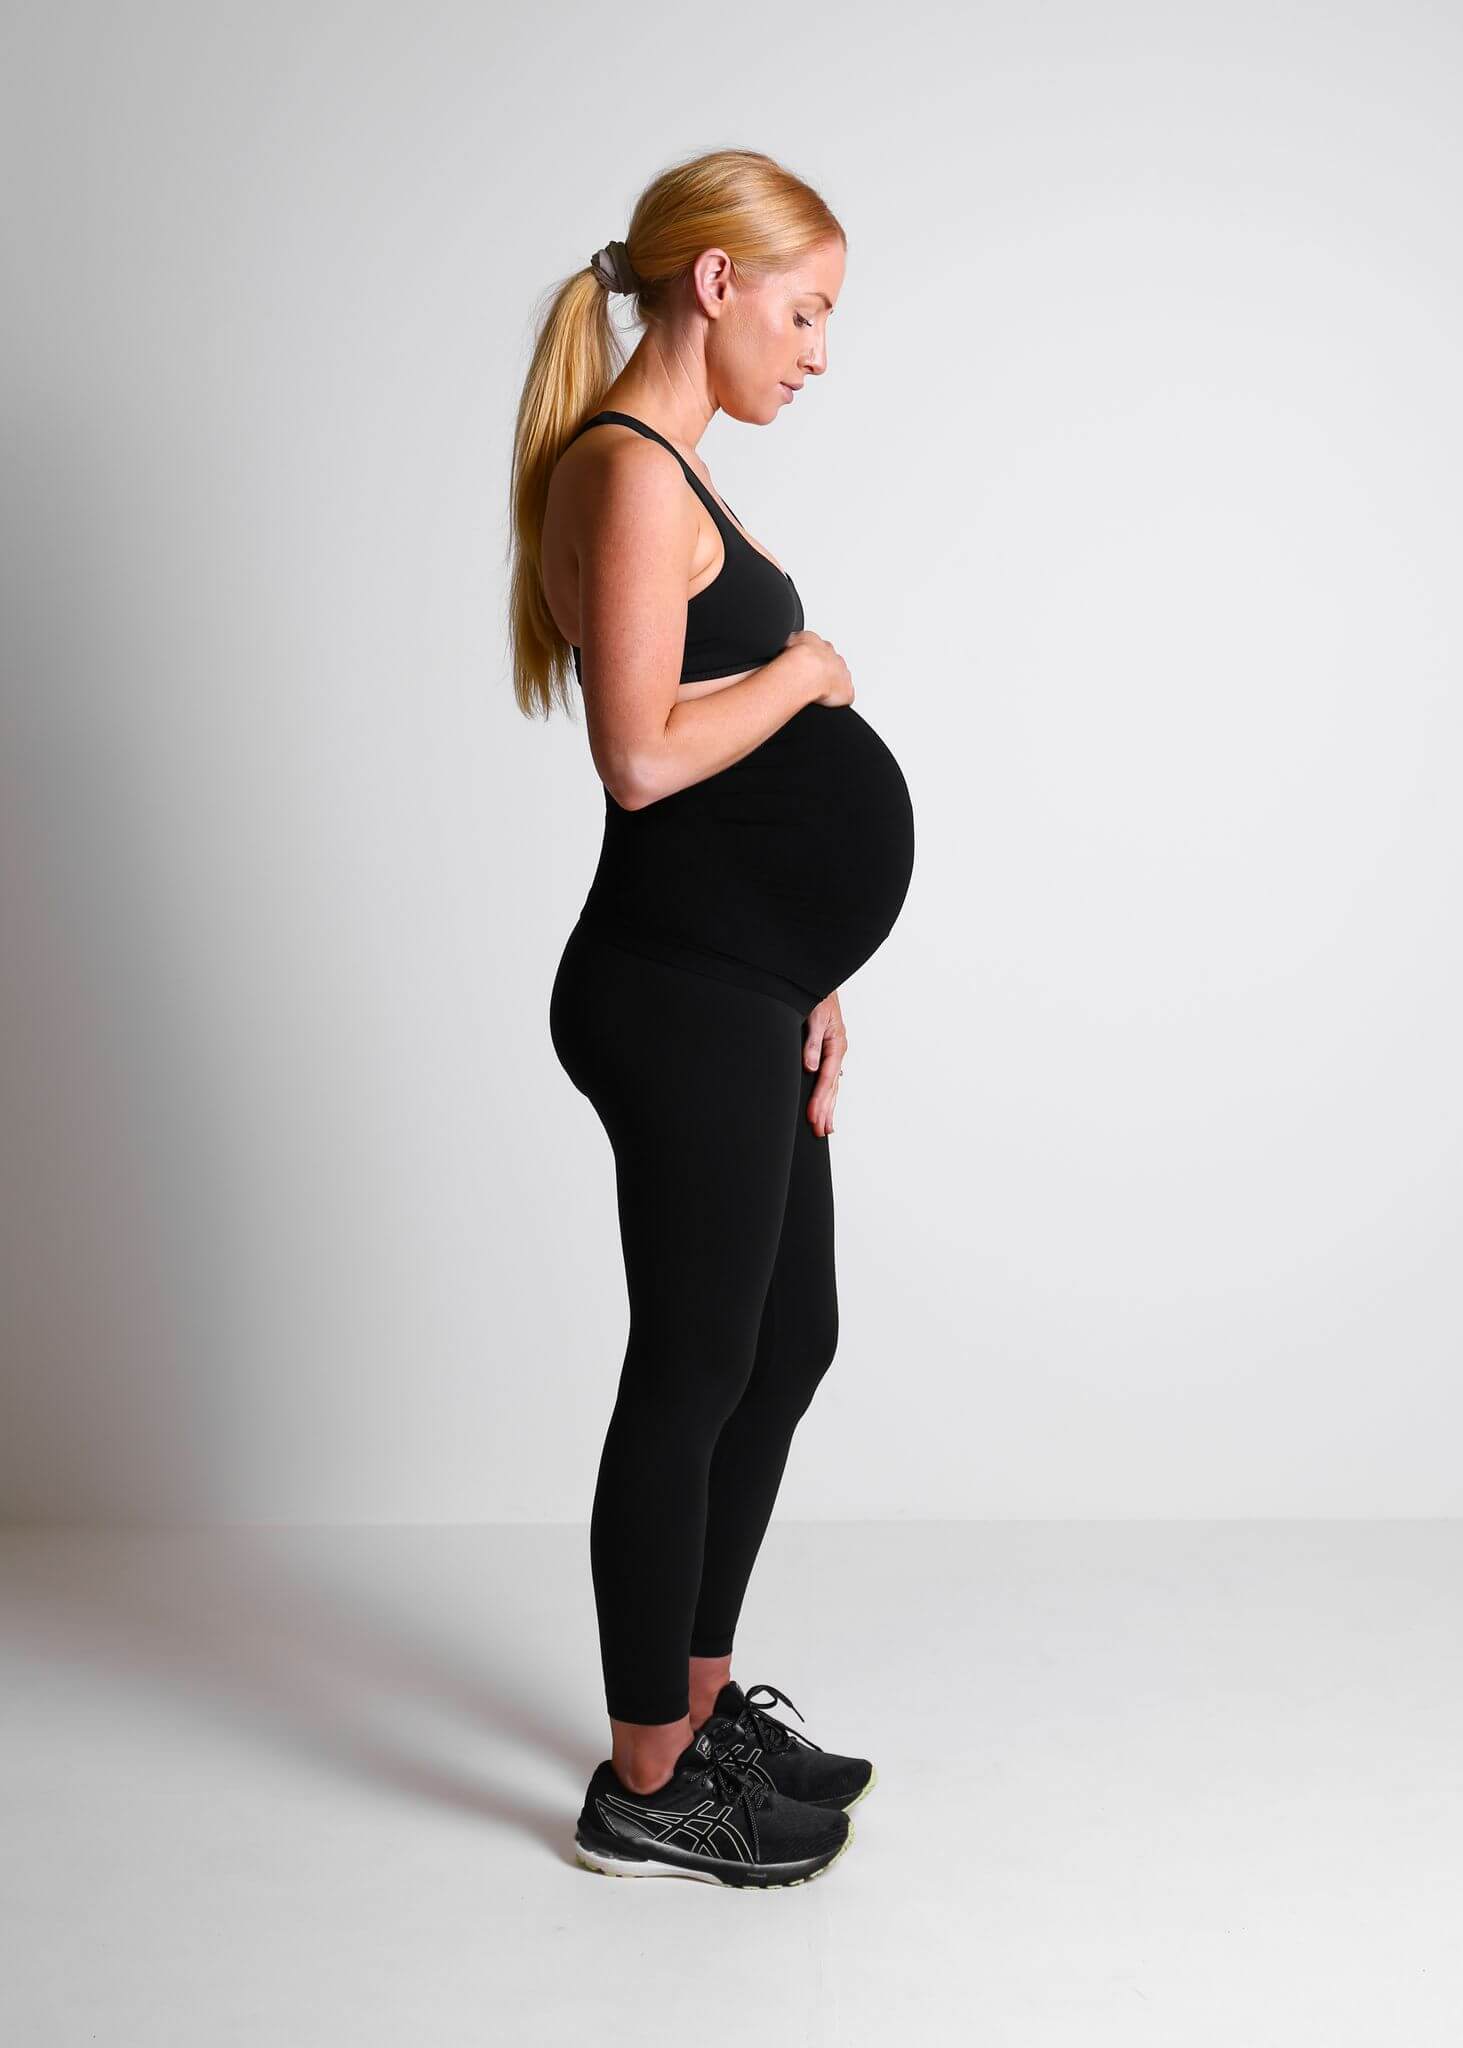 SRC Pregnancy Leggings - Australian Physiotherapy Equipment